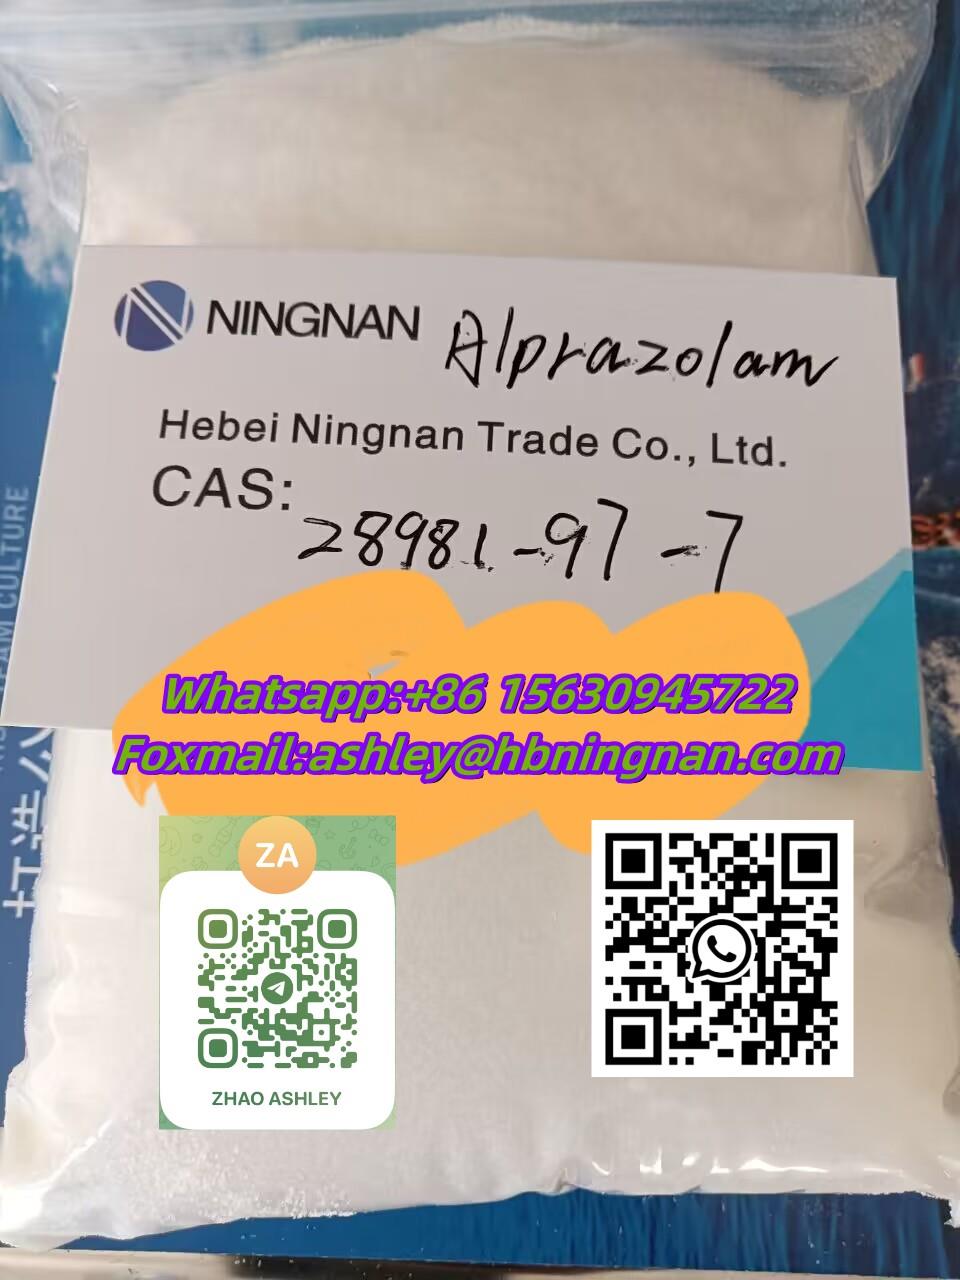 cas 28981-97-7  Alprazolam 100% safe delivery!,28981-97-7  Alprazolam,ningnan,Custom Manufacturing and Fabricating/Assemblies